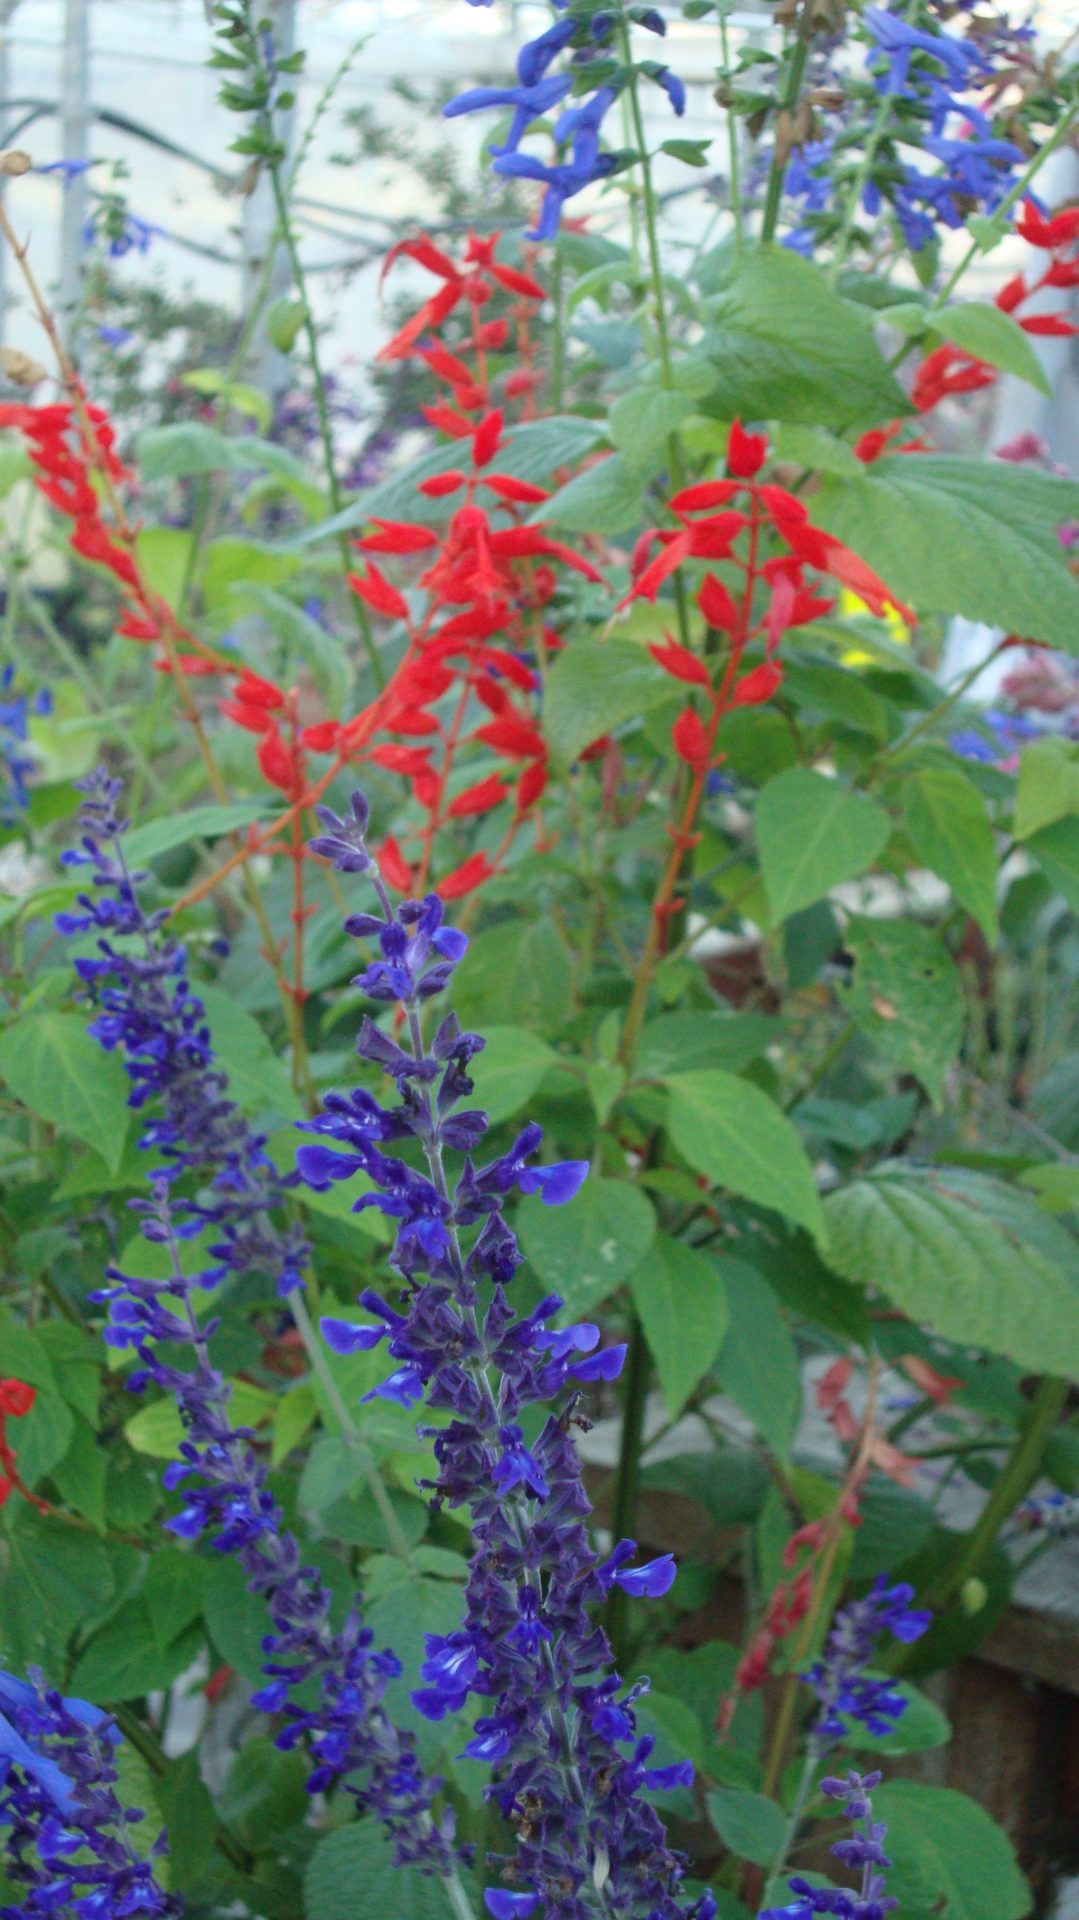 Salvia ‘Indigo Spires’, Salvia splendens ‘Jmmi’s Good Red’en Salvia ‘Blue Enigma’